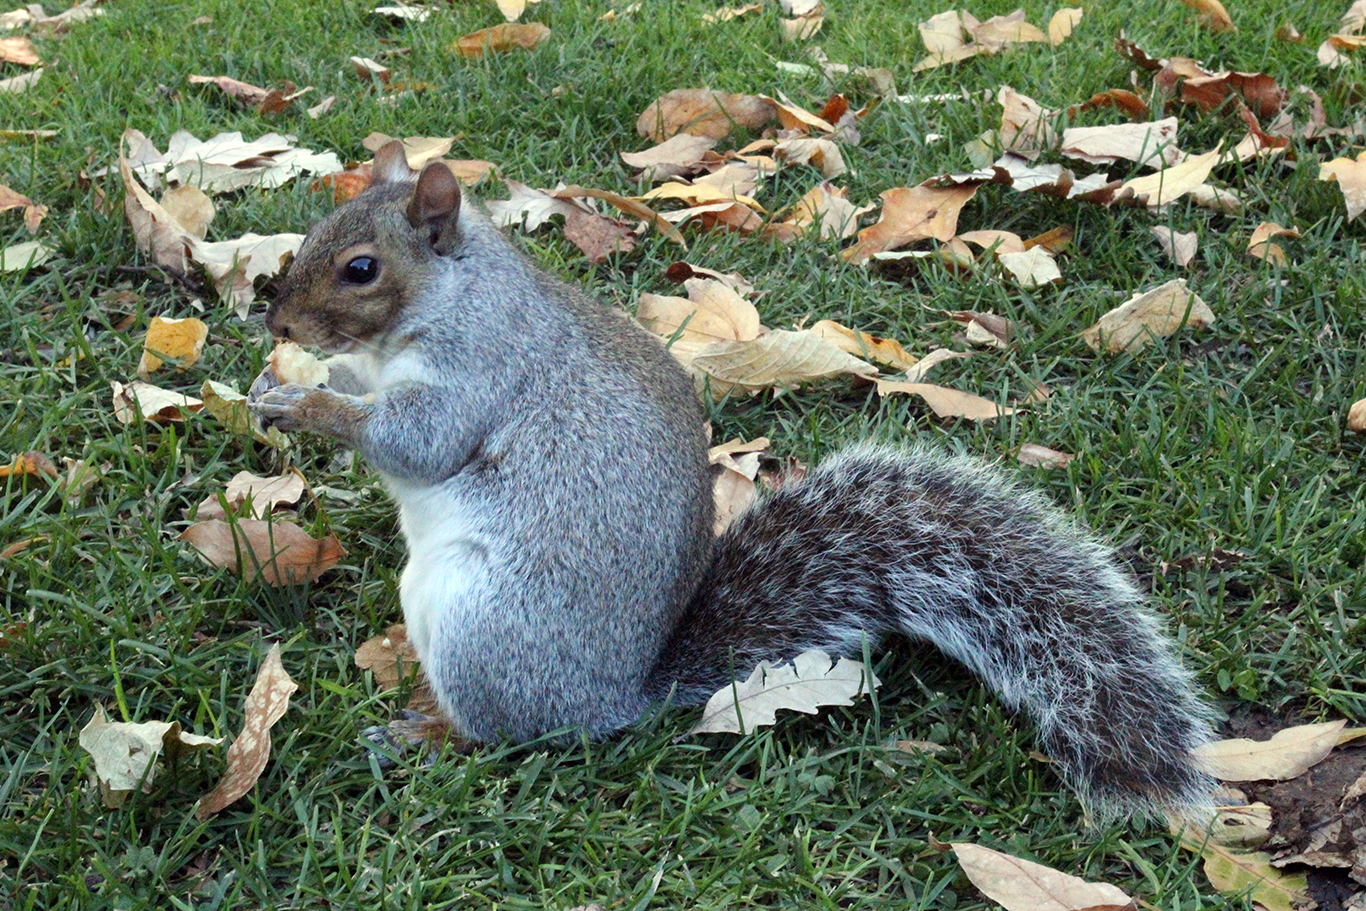 Fat Squirrels at Boston Common